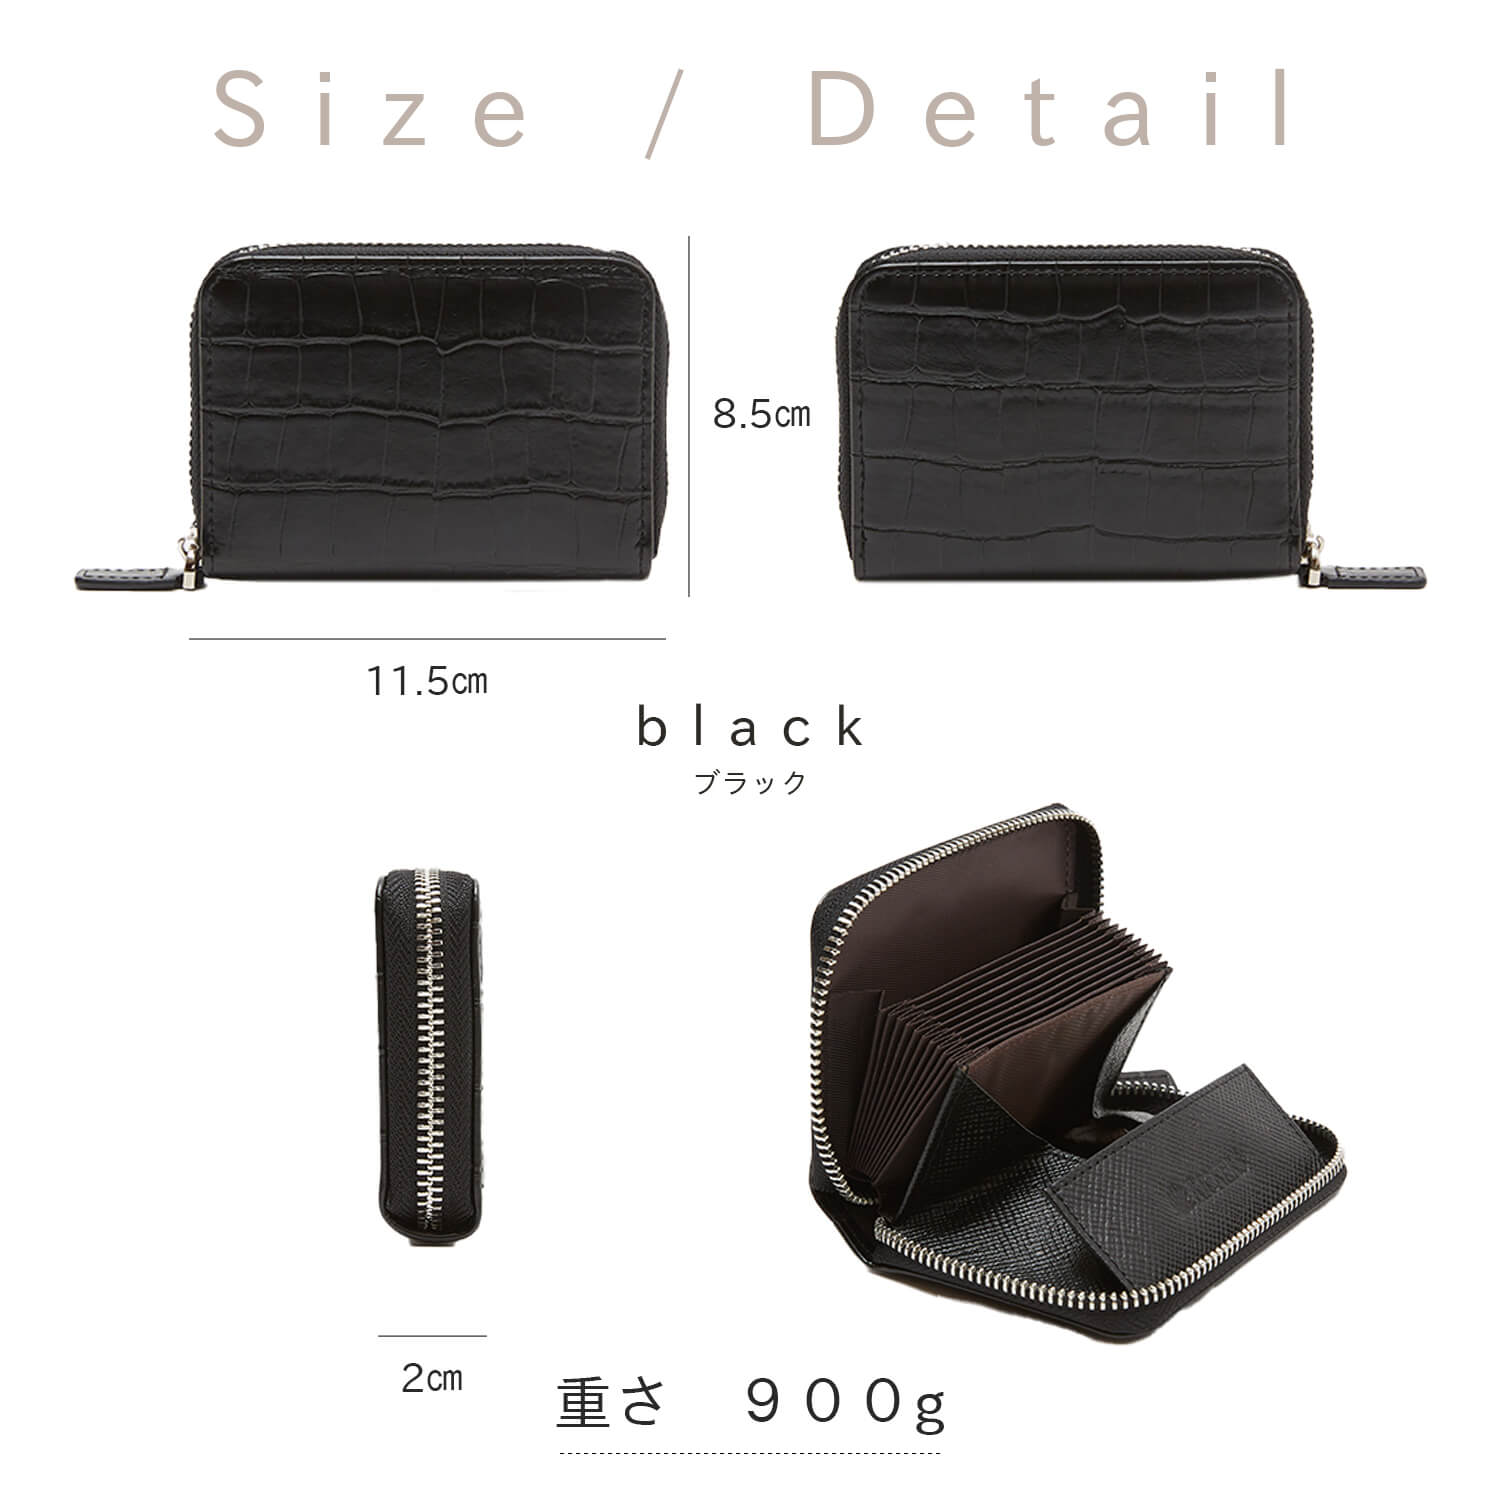 Size Detail 11.5cm 8.5cm black ブラック 2cm 重さ 900g